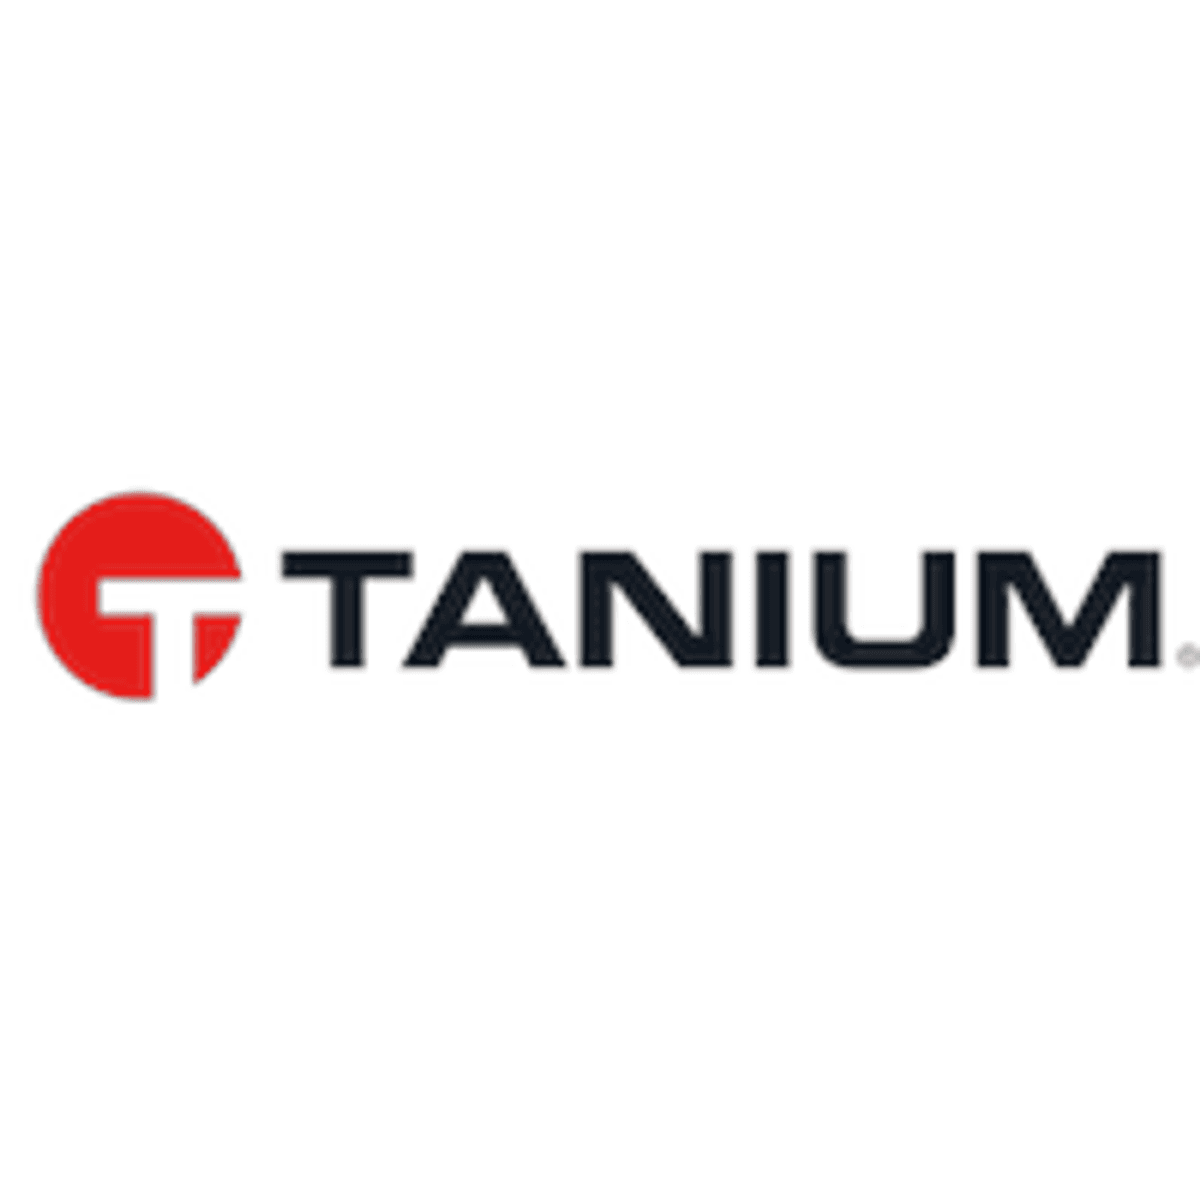 Tanium vernieuwt platform voor endpoint management en security image